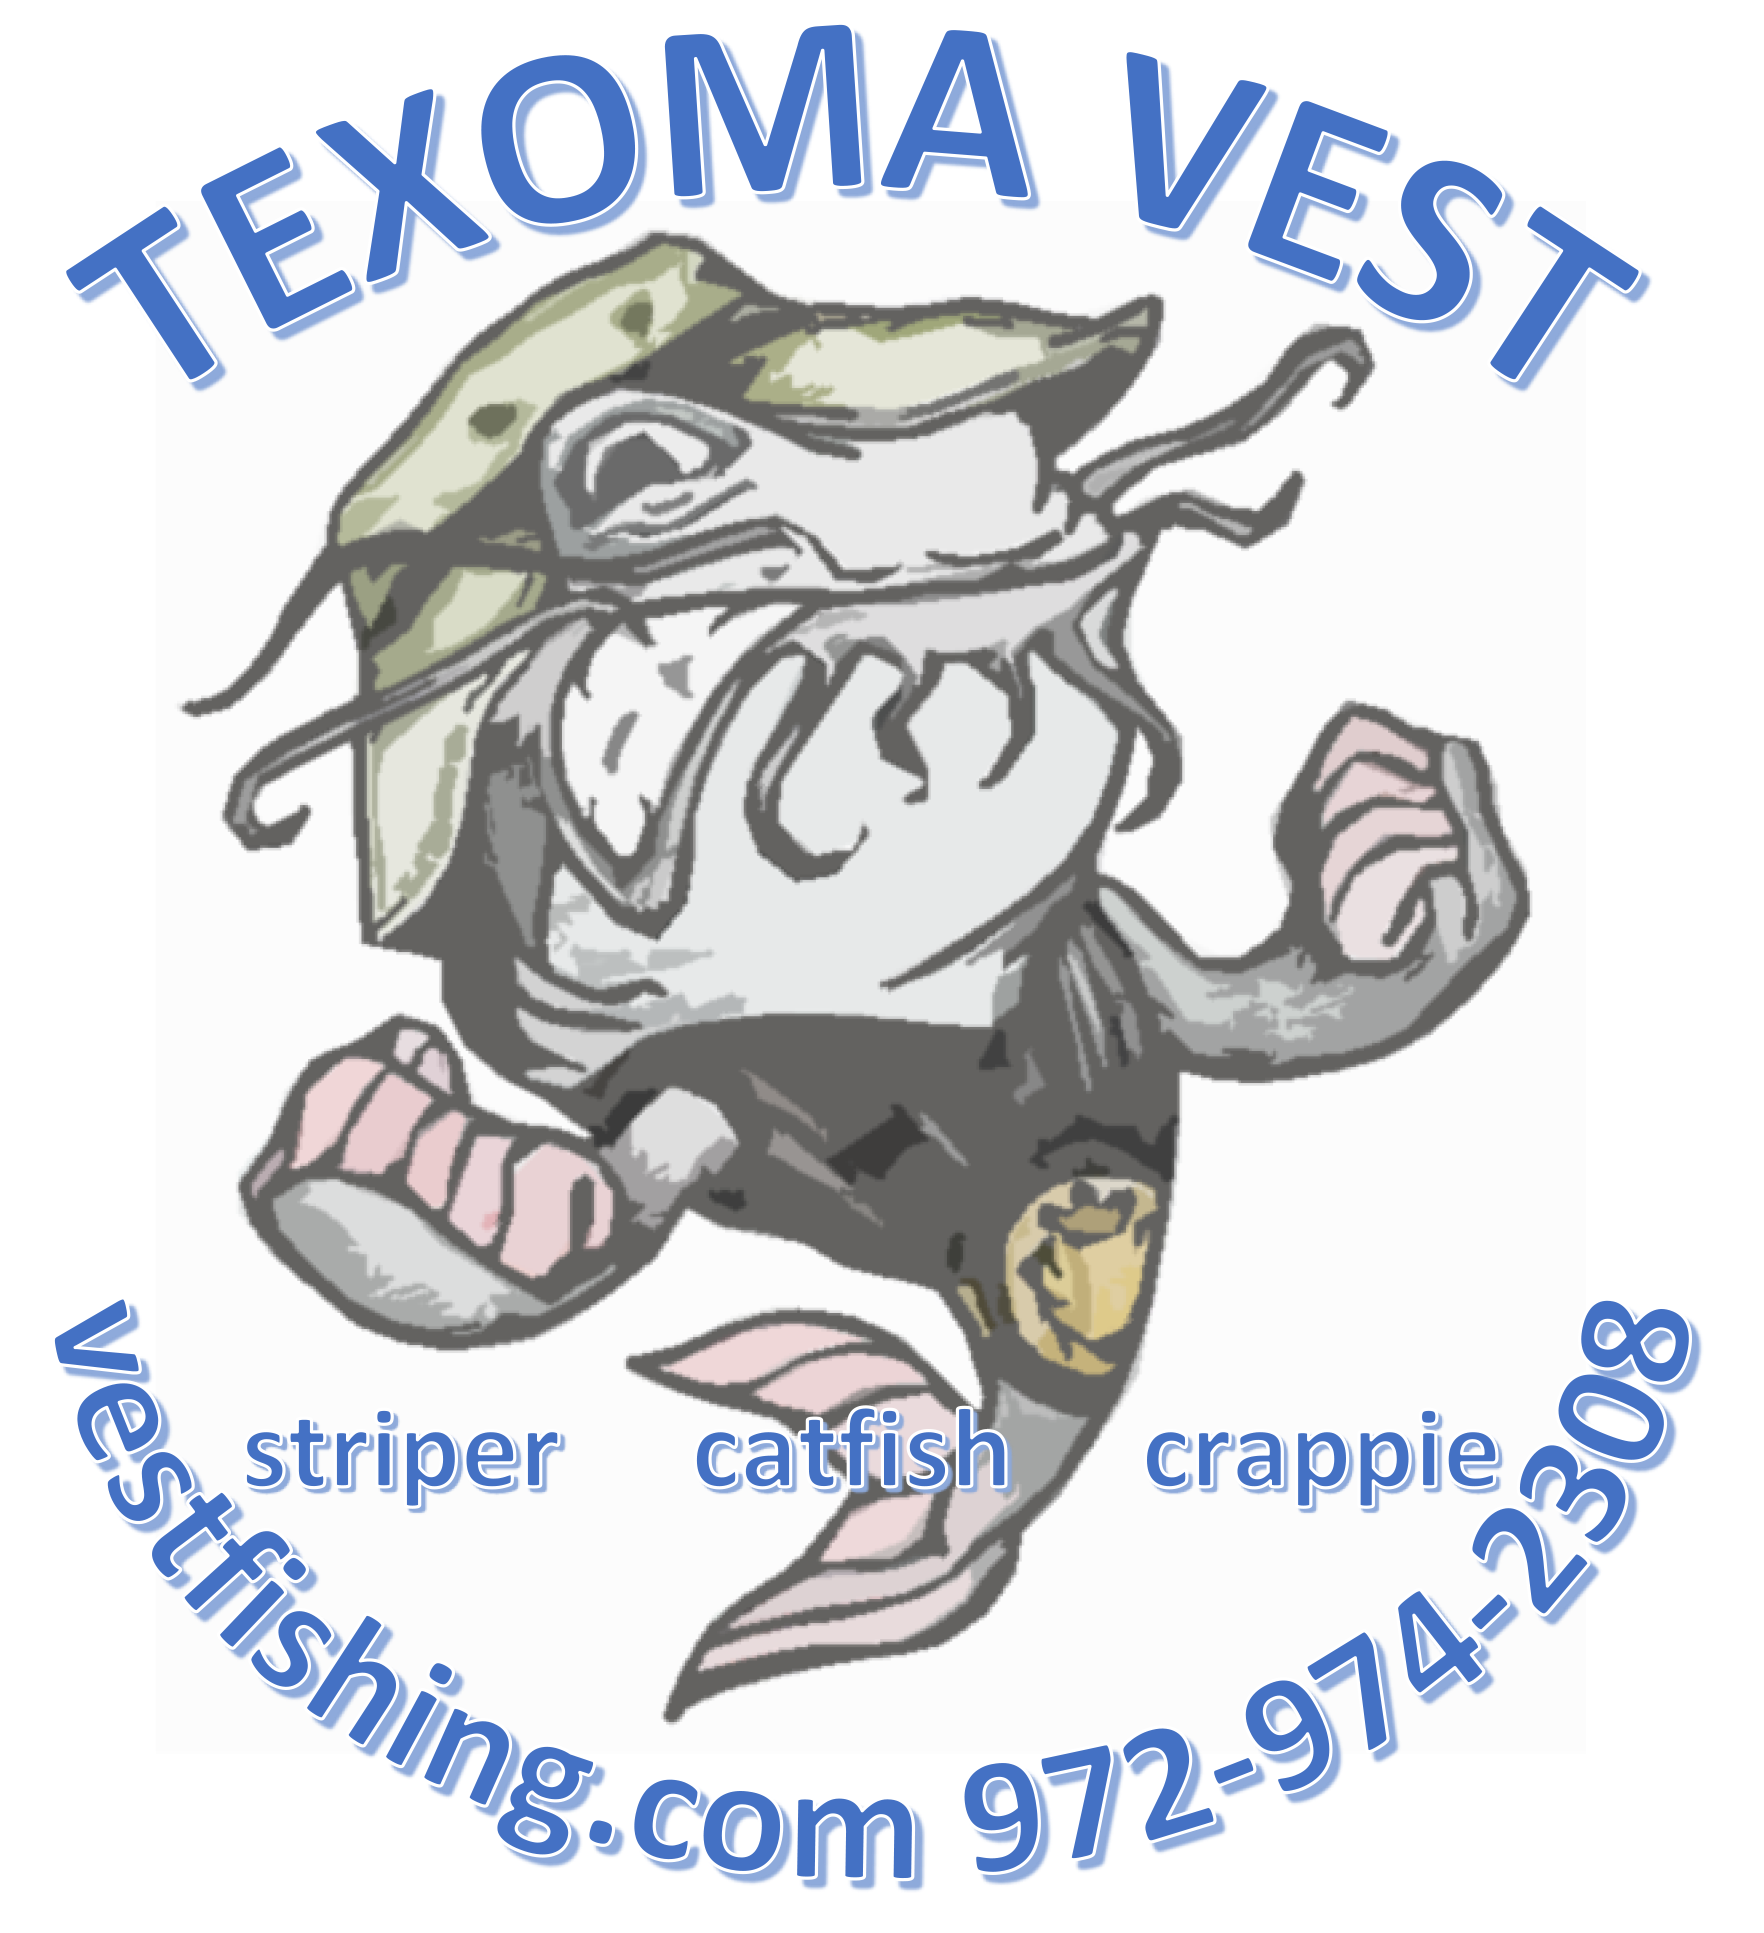 Texoma Vest Fishing